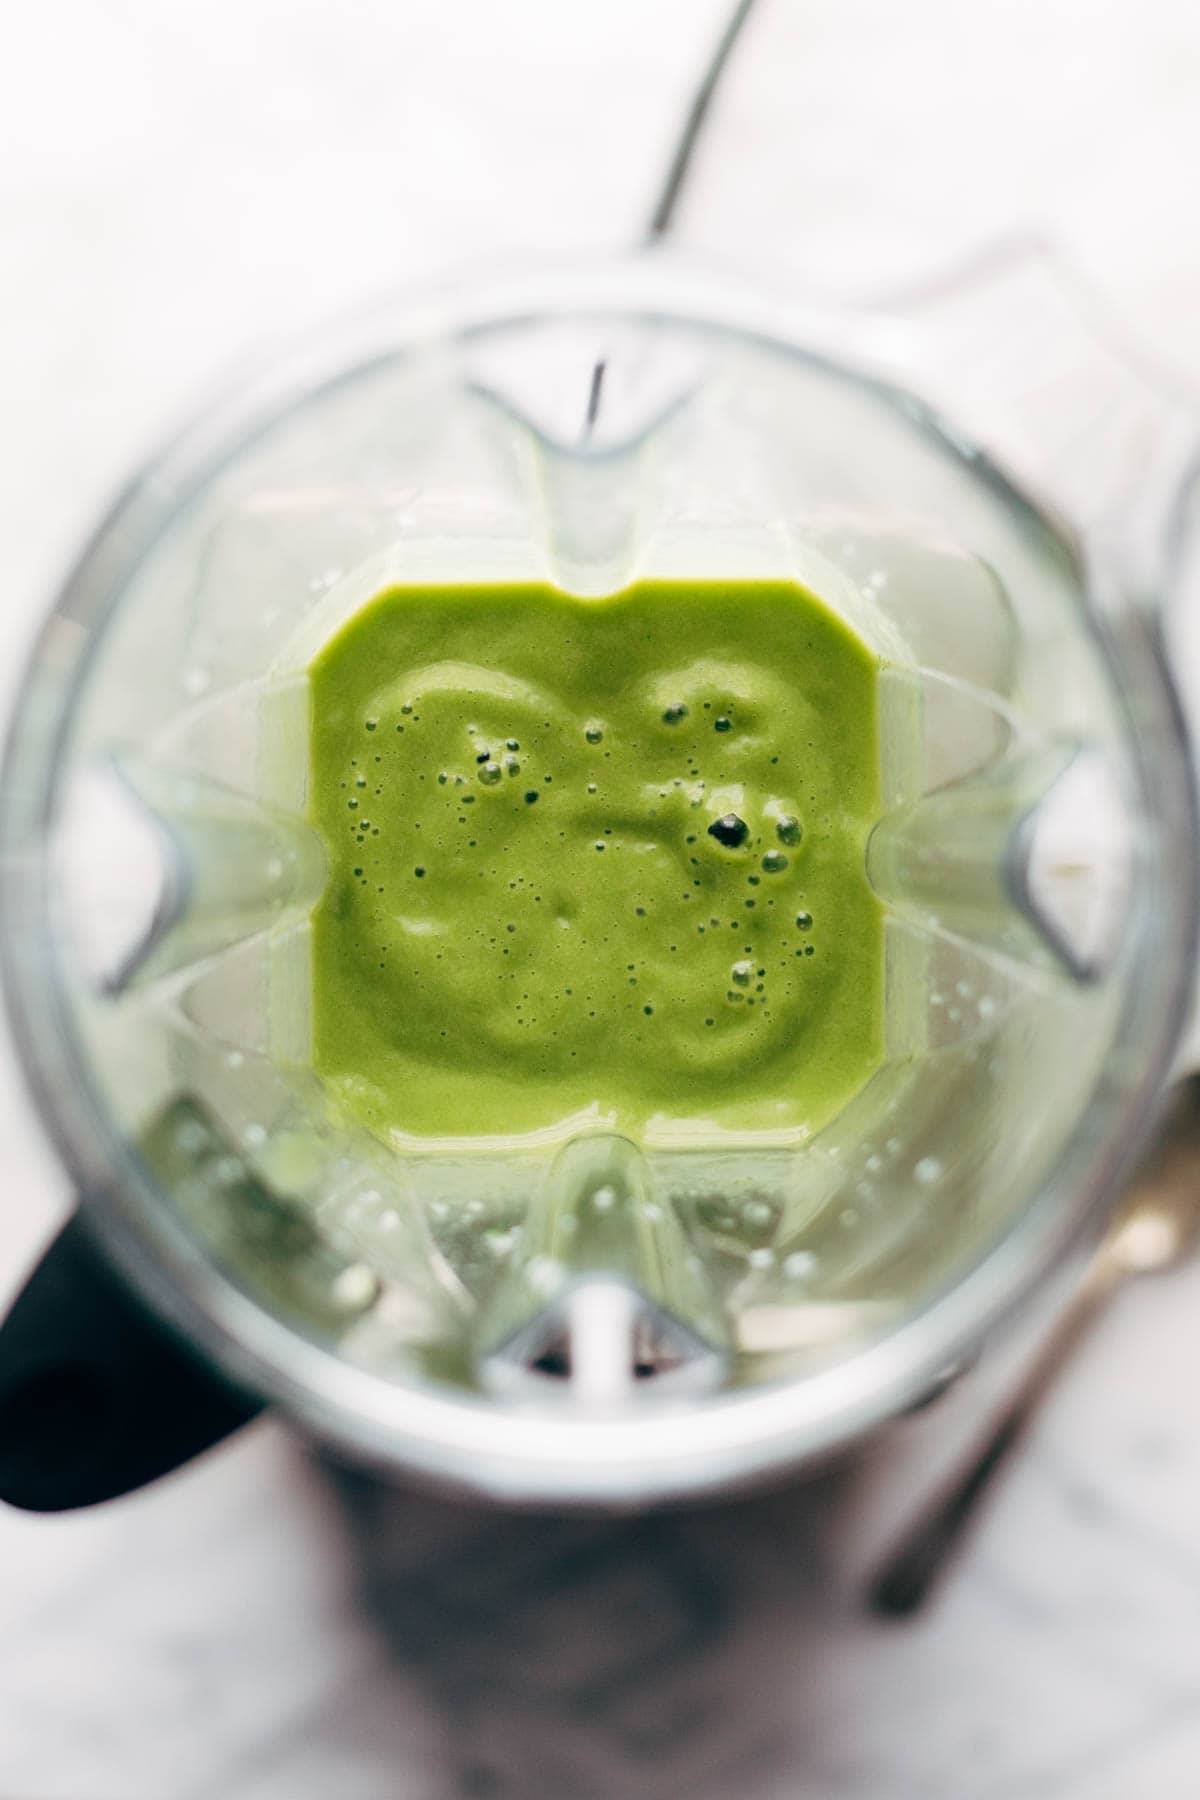 Green smoothie blended.